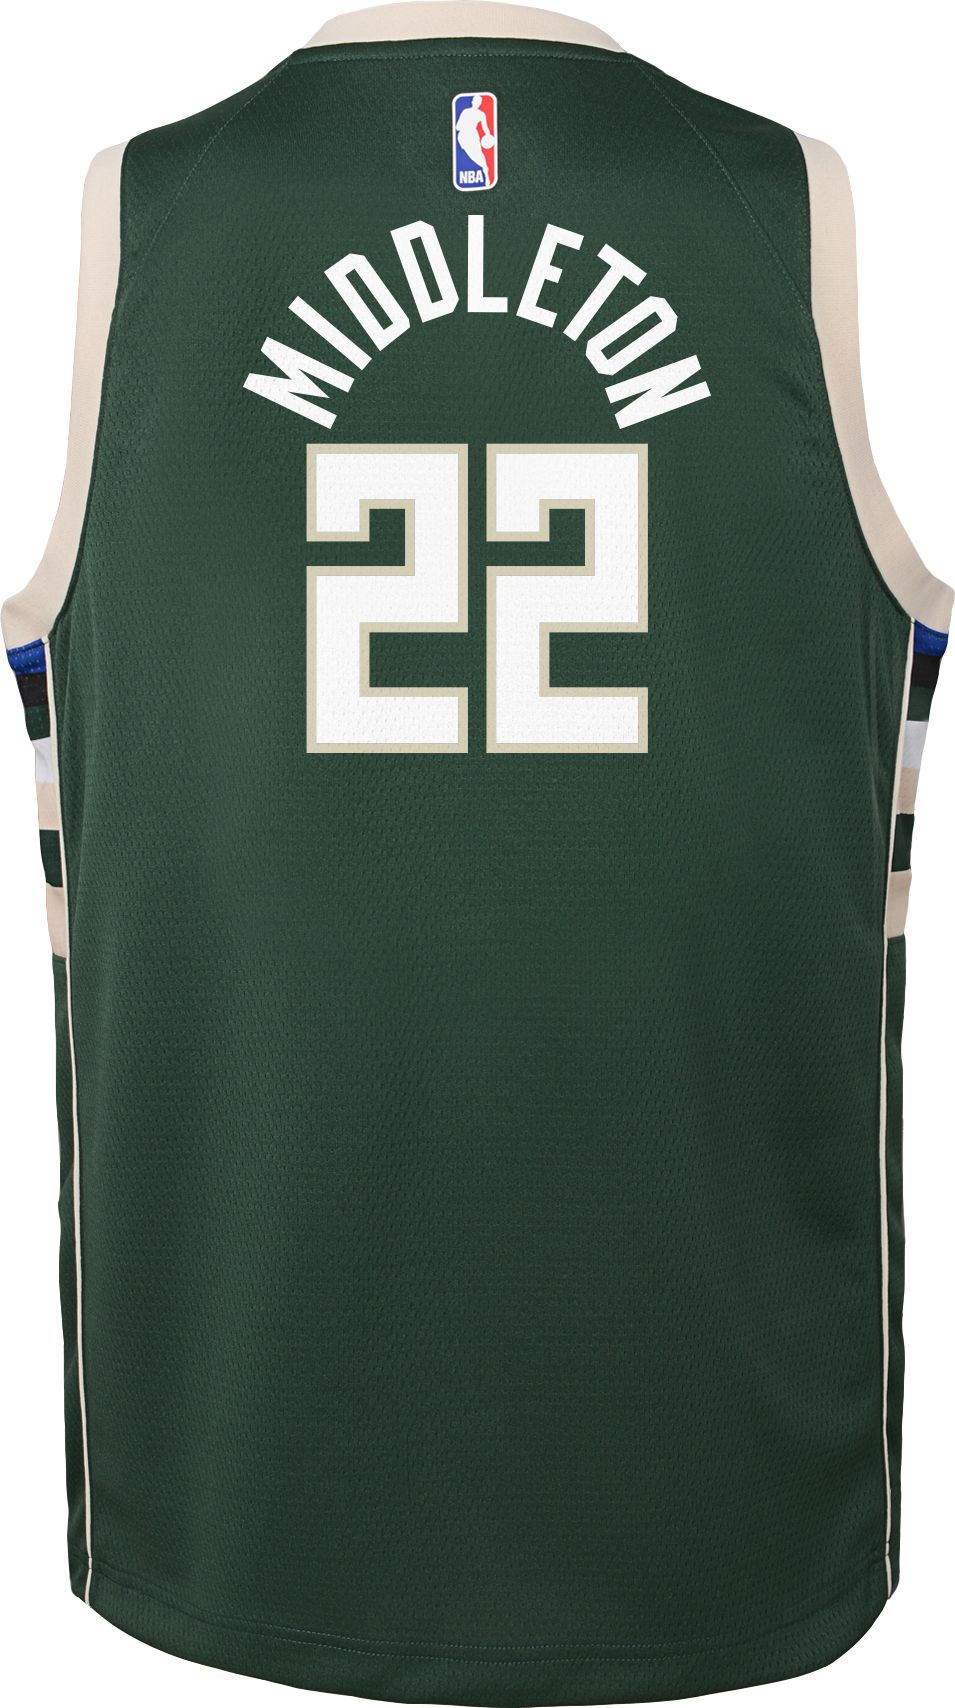 Nike Youth Milwaukee Bucks Khris Middleton #22 Green Dri-FIT Icon Swingman Jersey